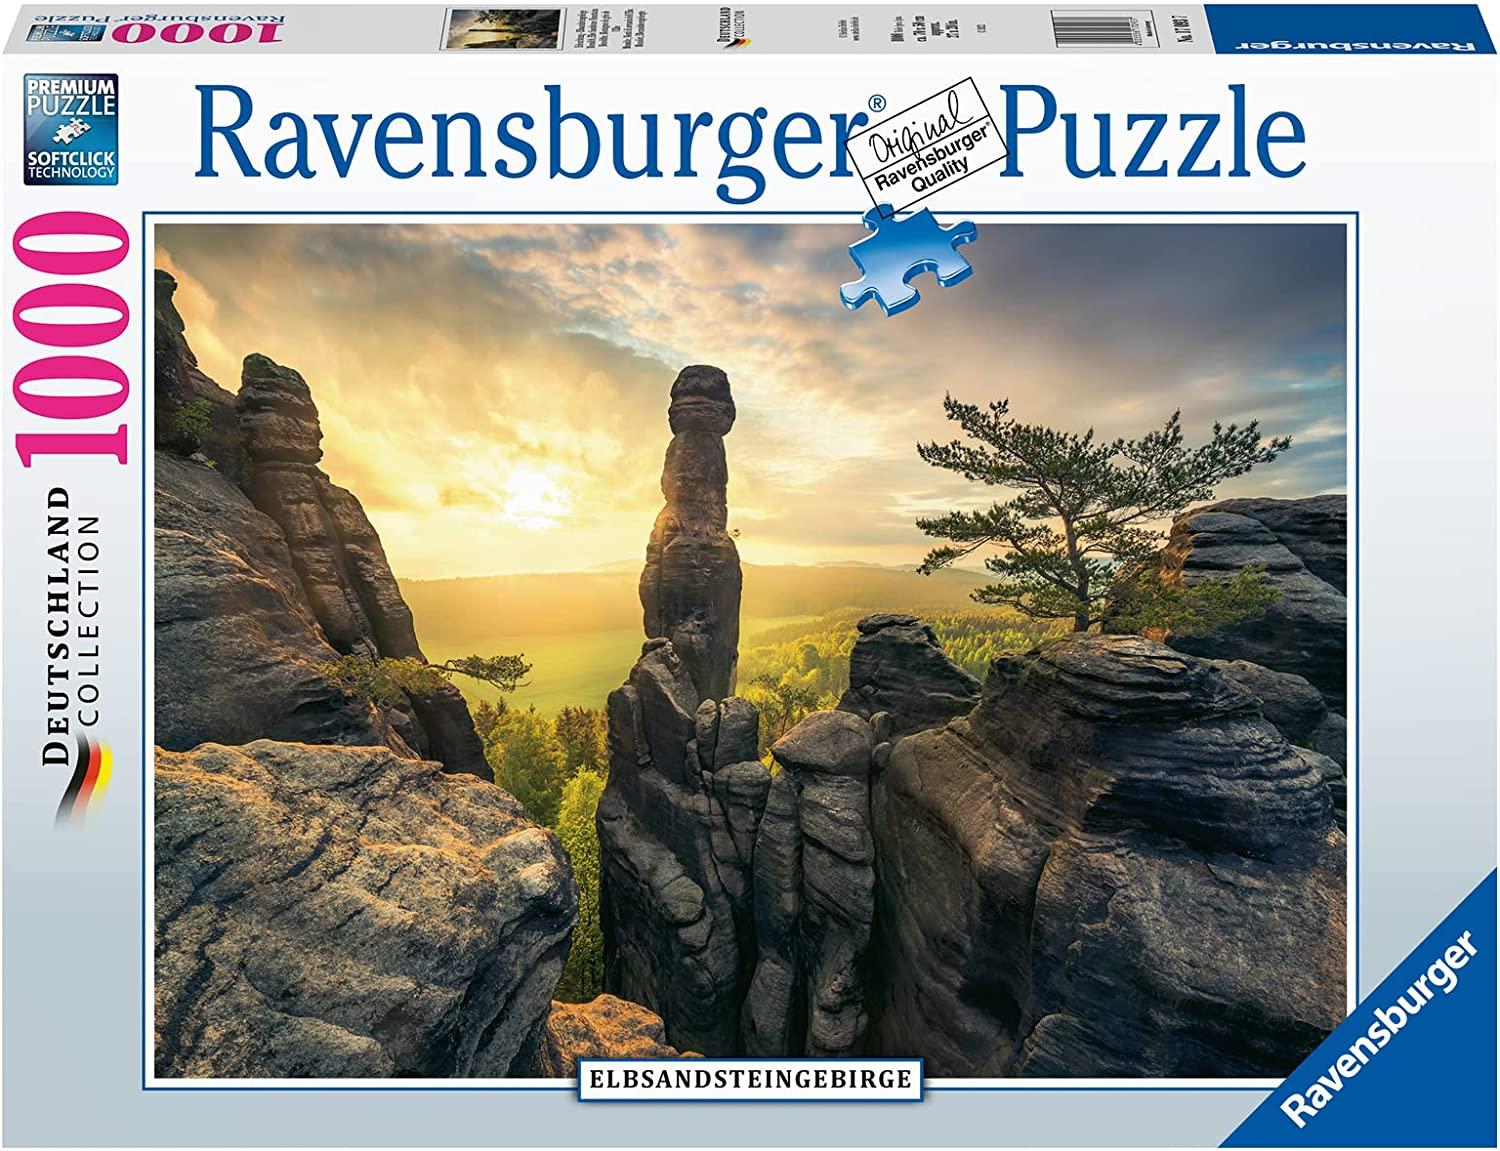 Ravensburger Puzzle - Elbsandsteingebirge - 1000 Teile